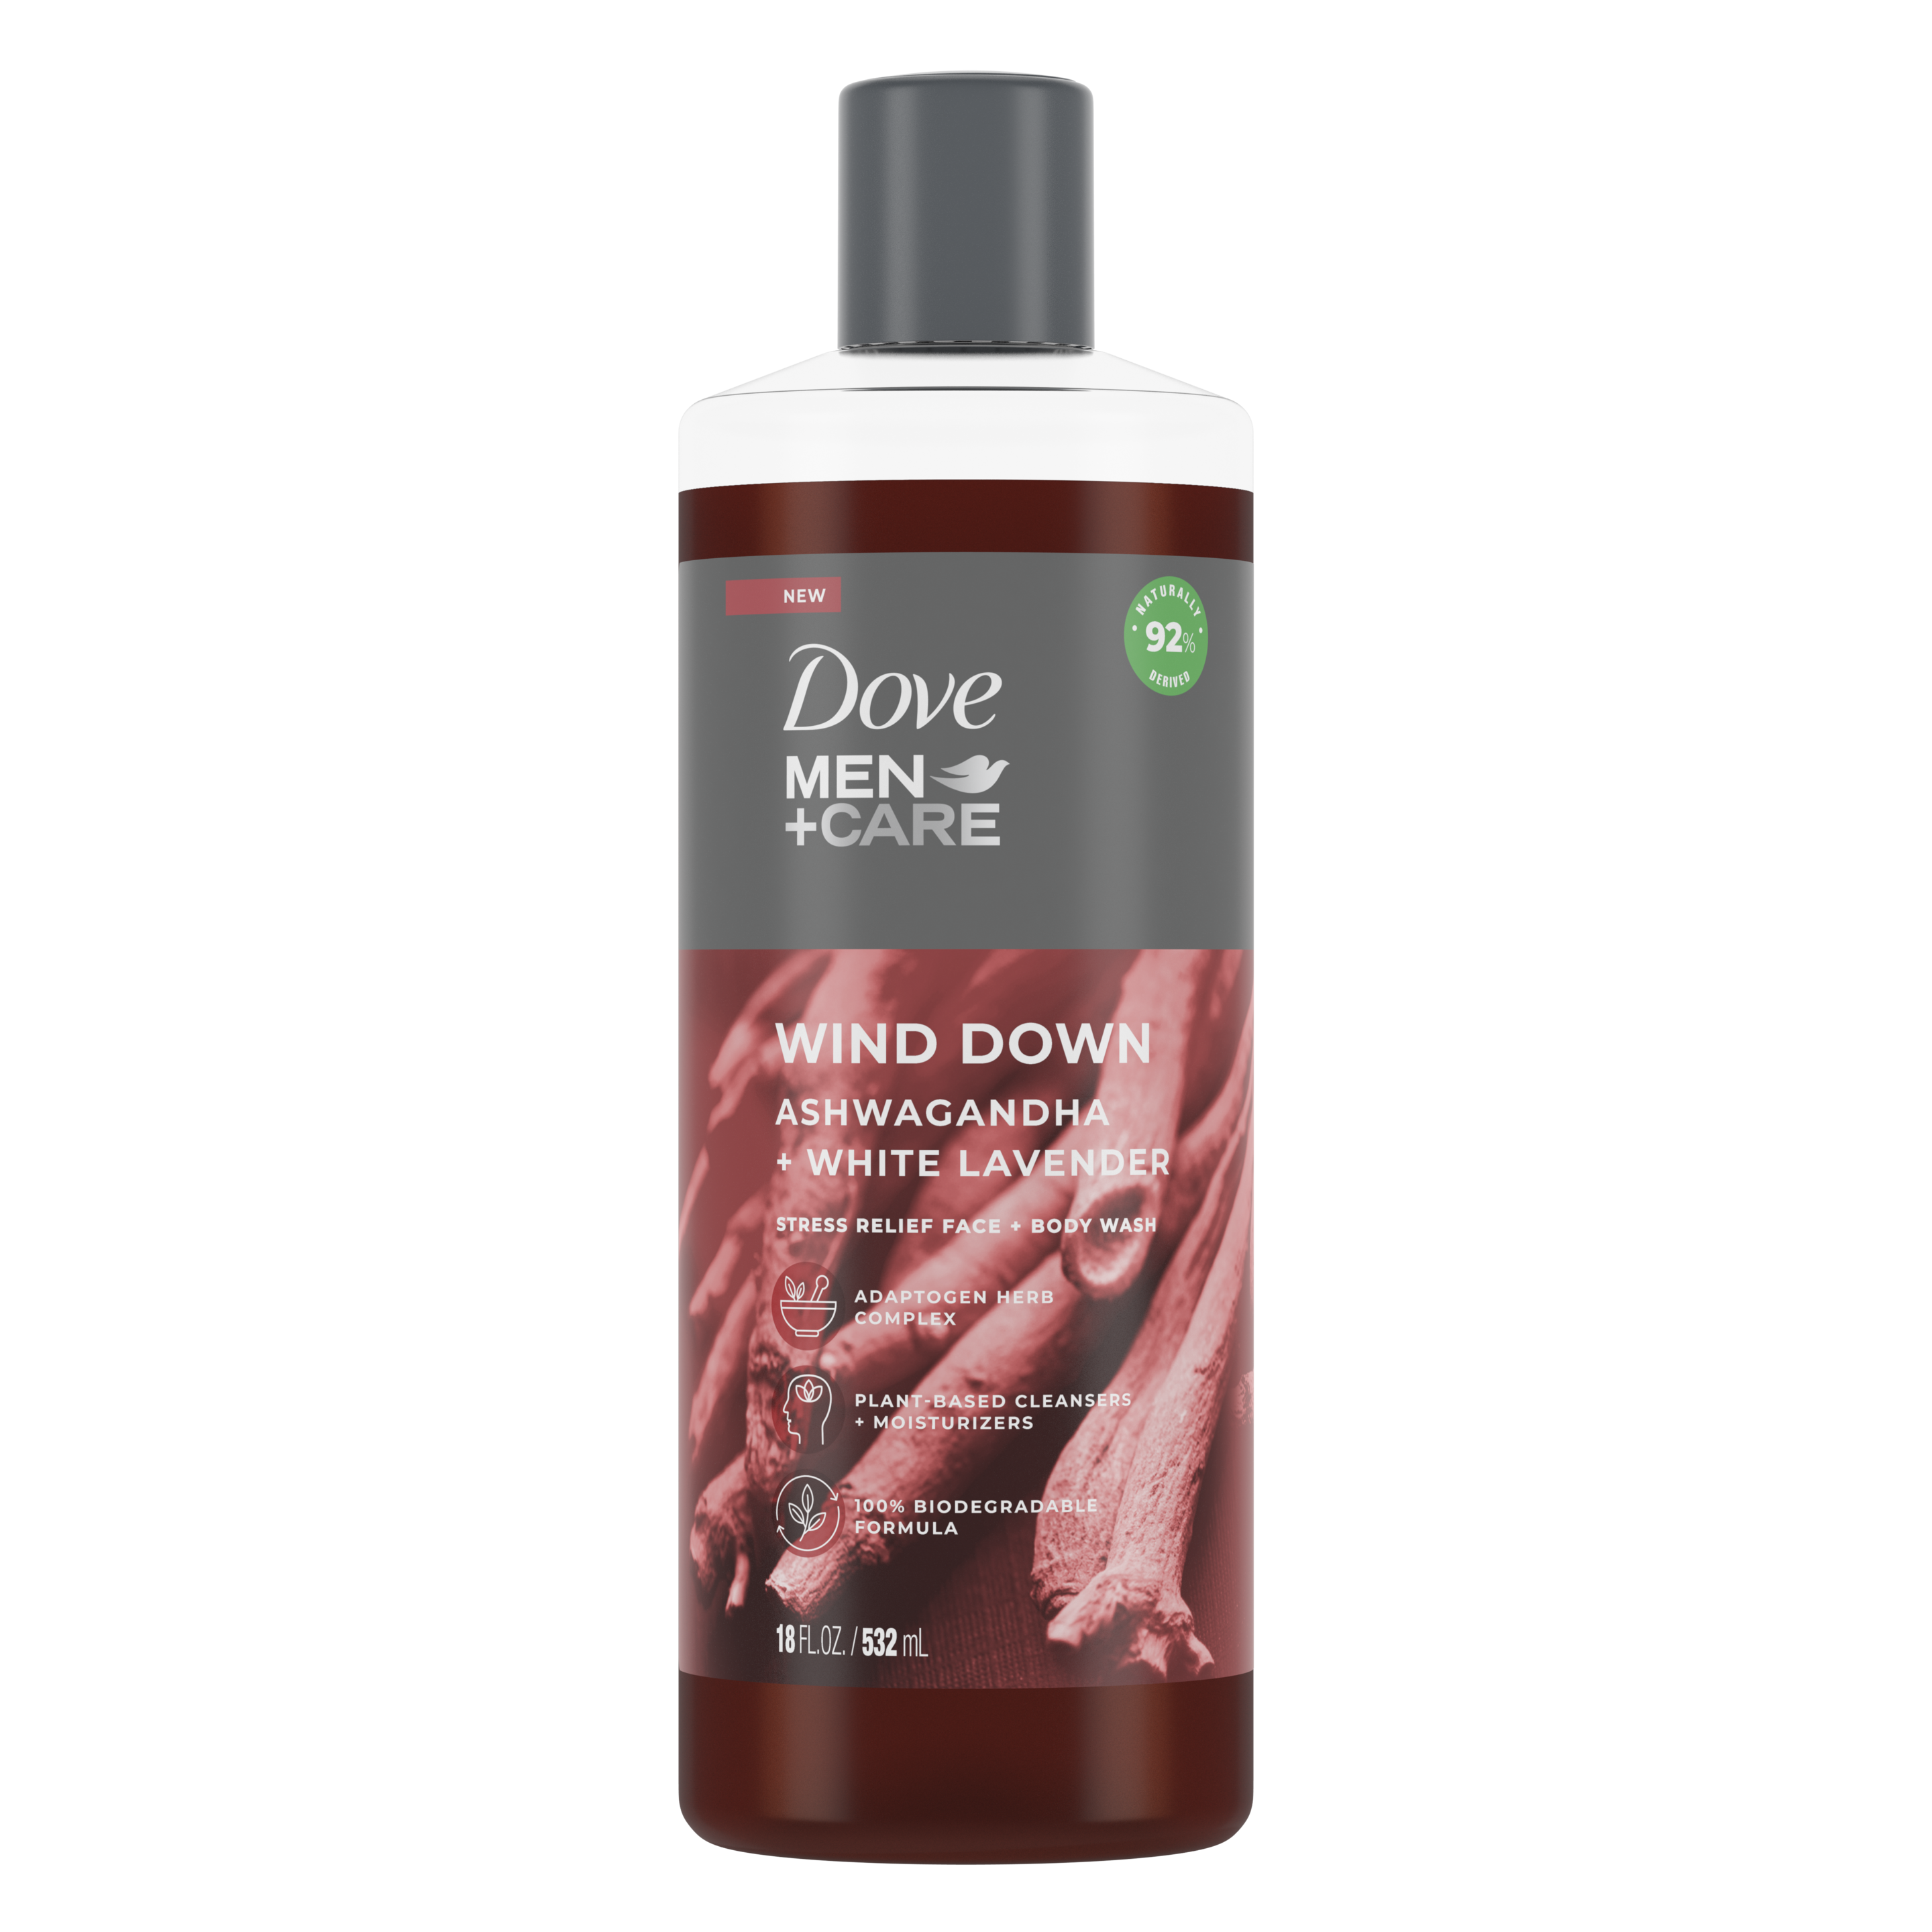 Dove Men+Care Wind Down Ashwagandha + White Lavender Face + Body Wash